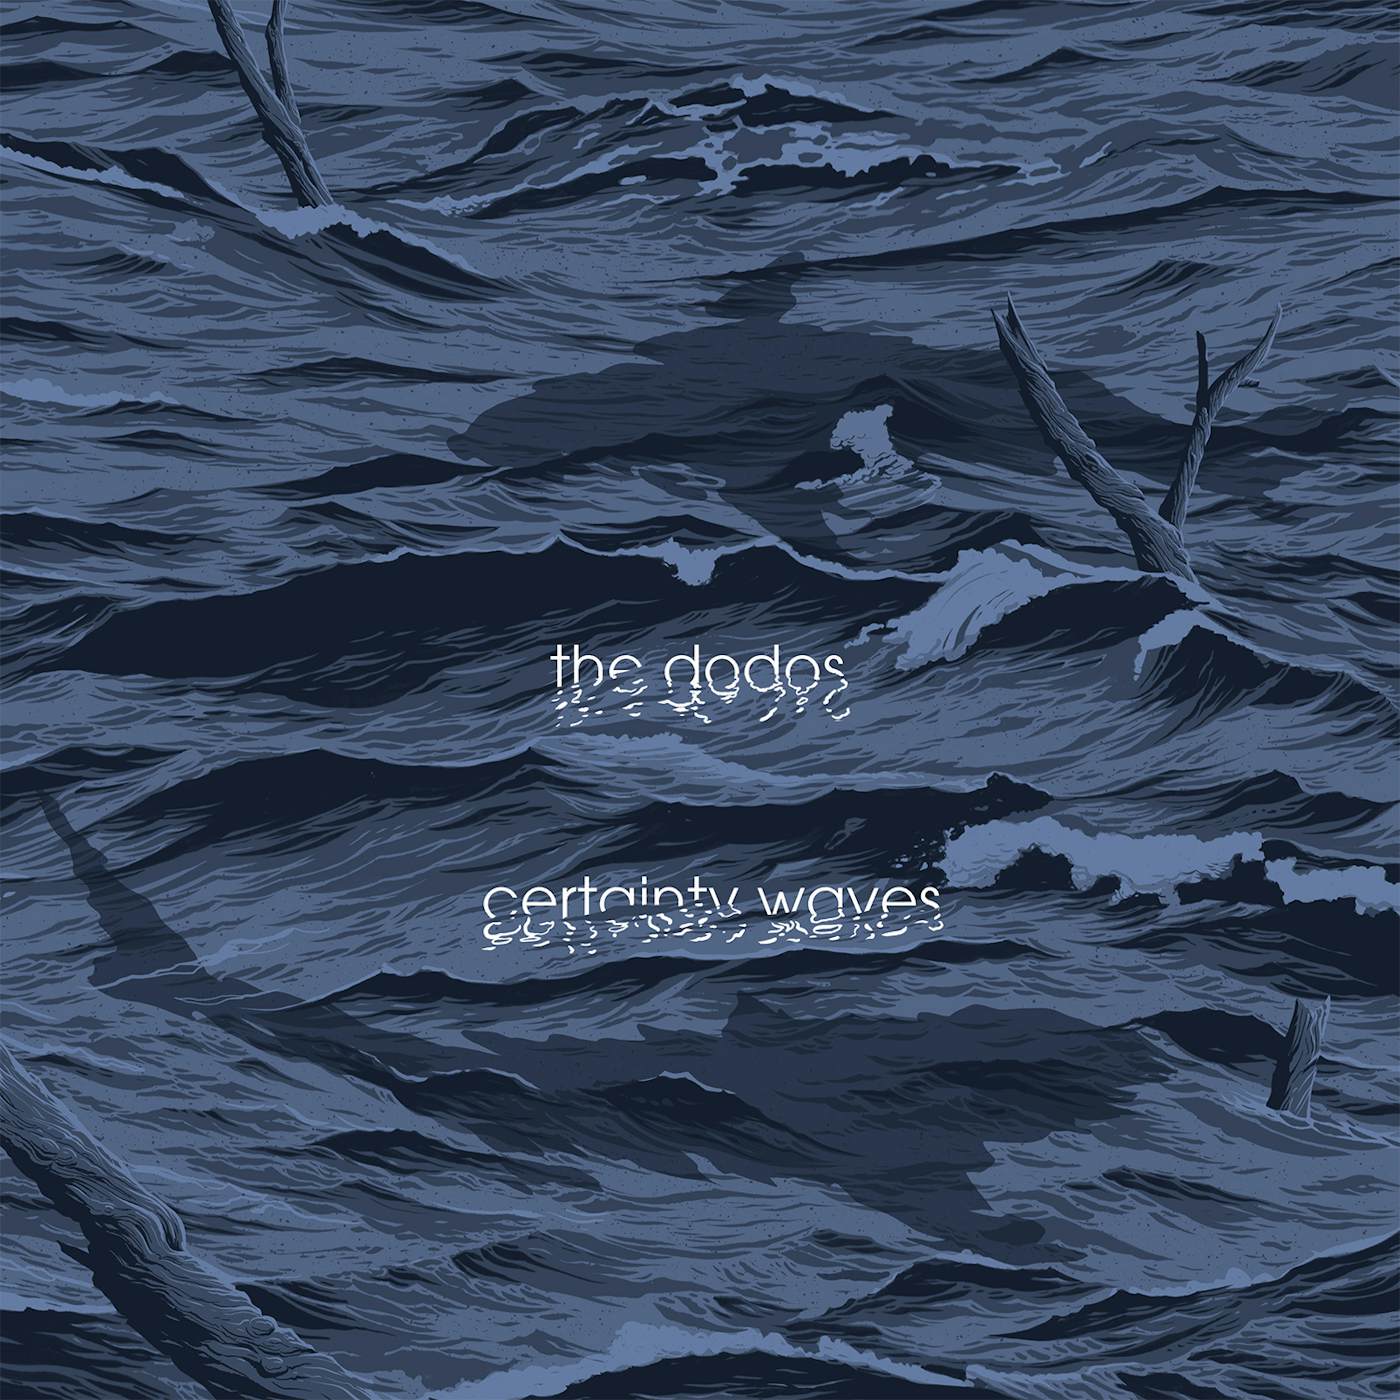 Dodos CERTAINTY WAVES CD